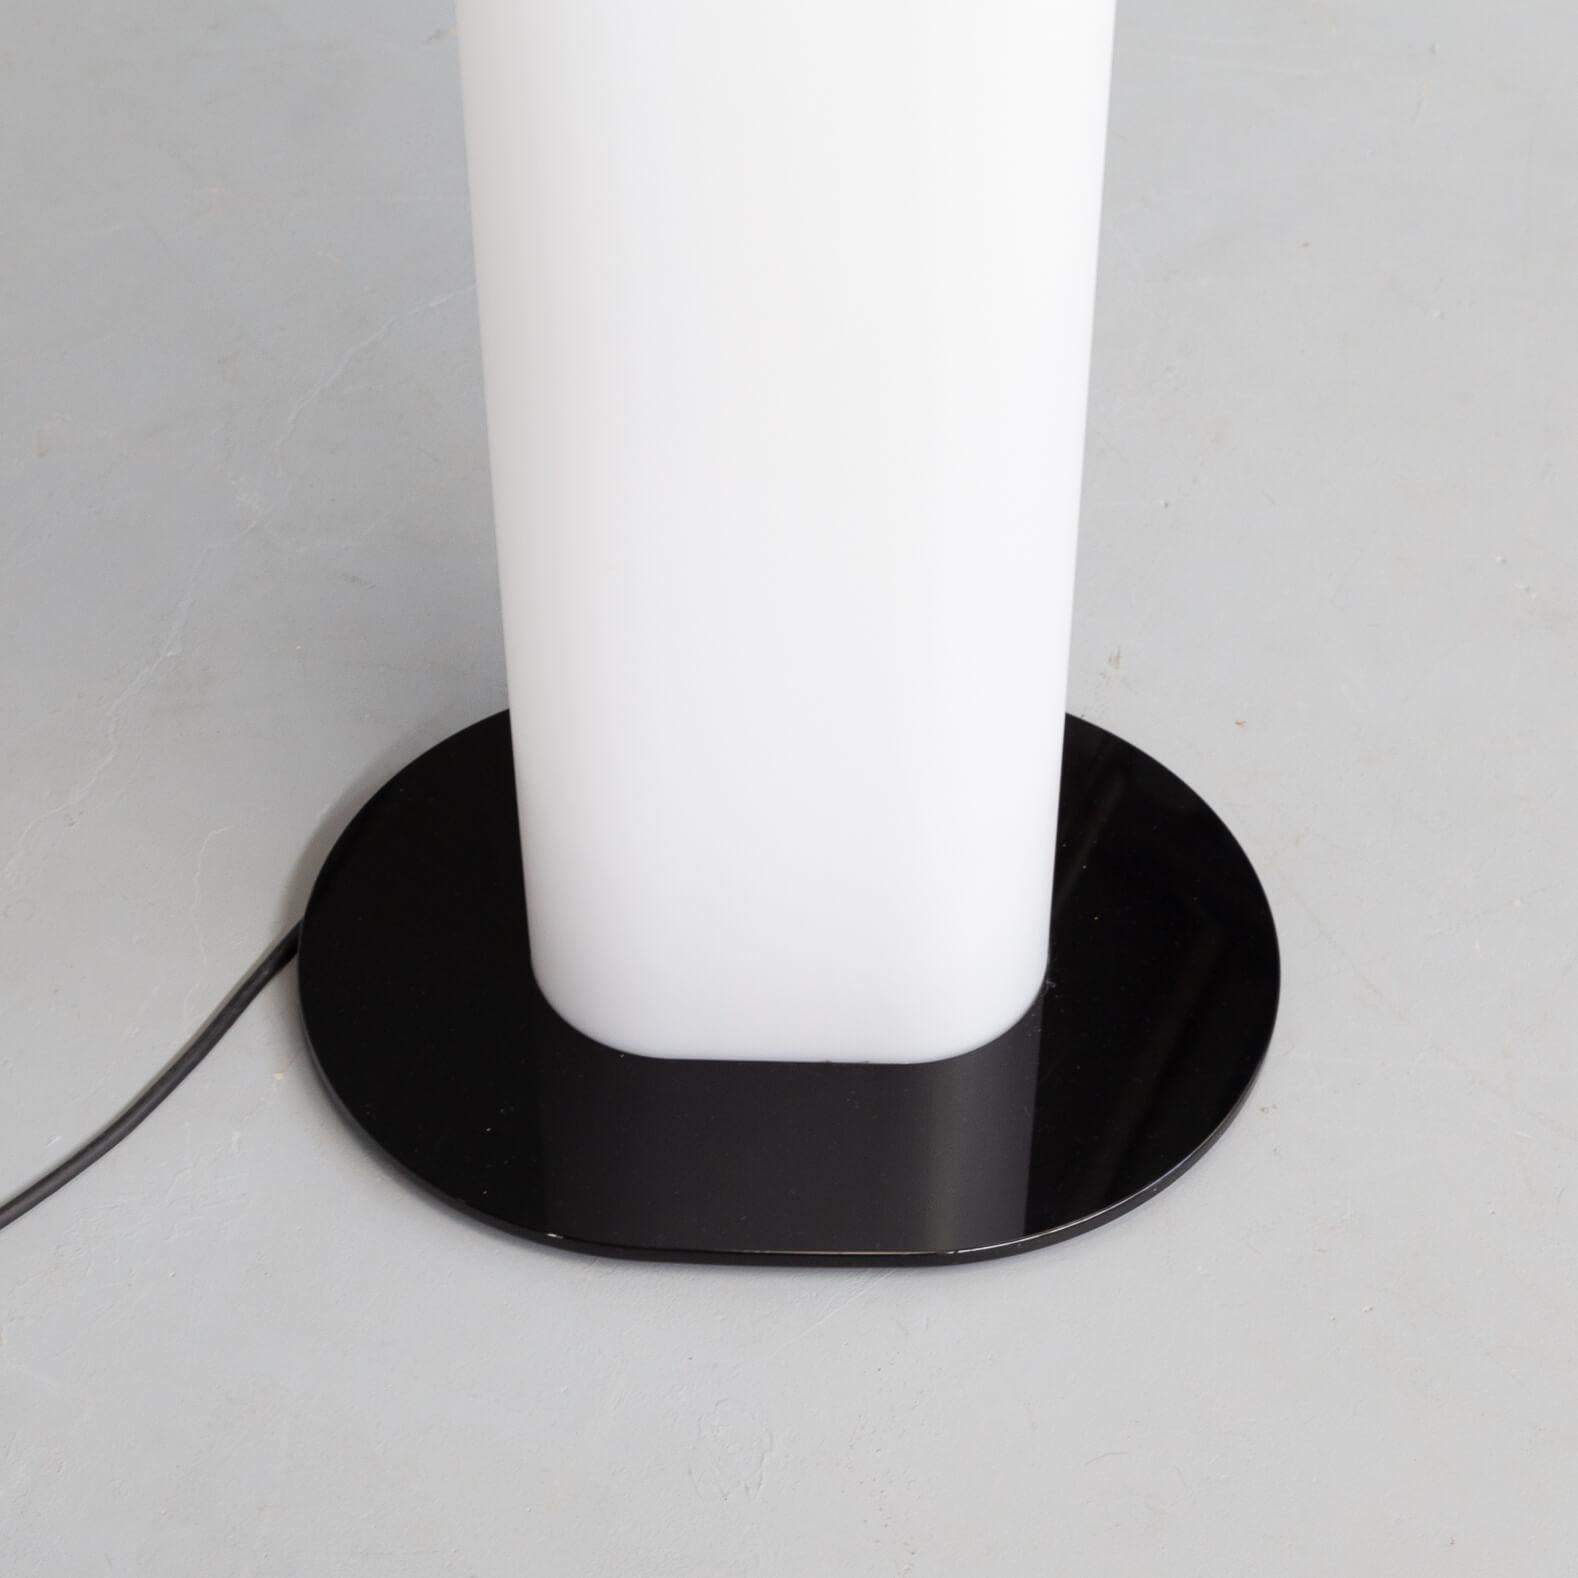 Naoto Fukasawa ‘Leia’ floorlamp for Belux In Good Condition For Sale In Amstelveen, Noord